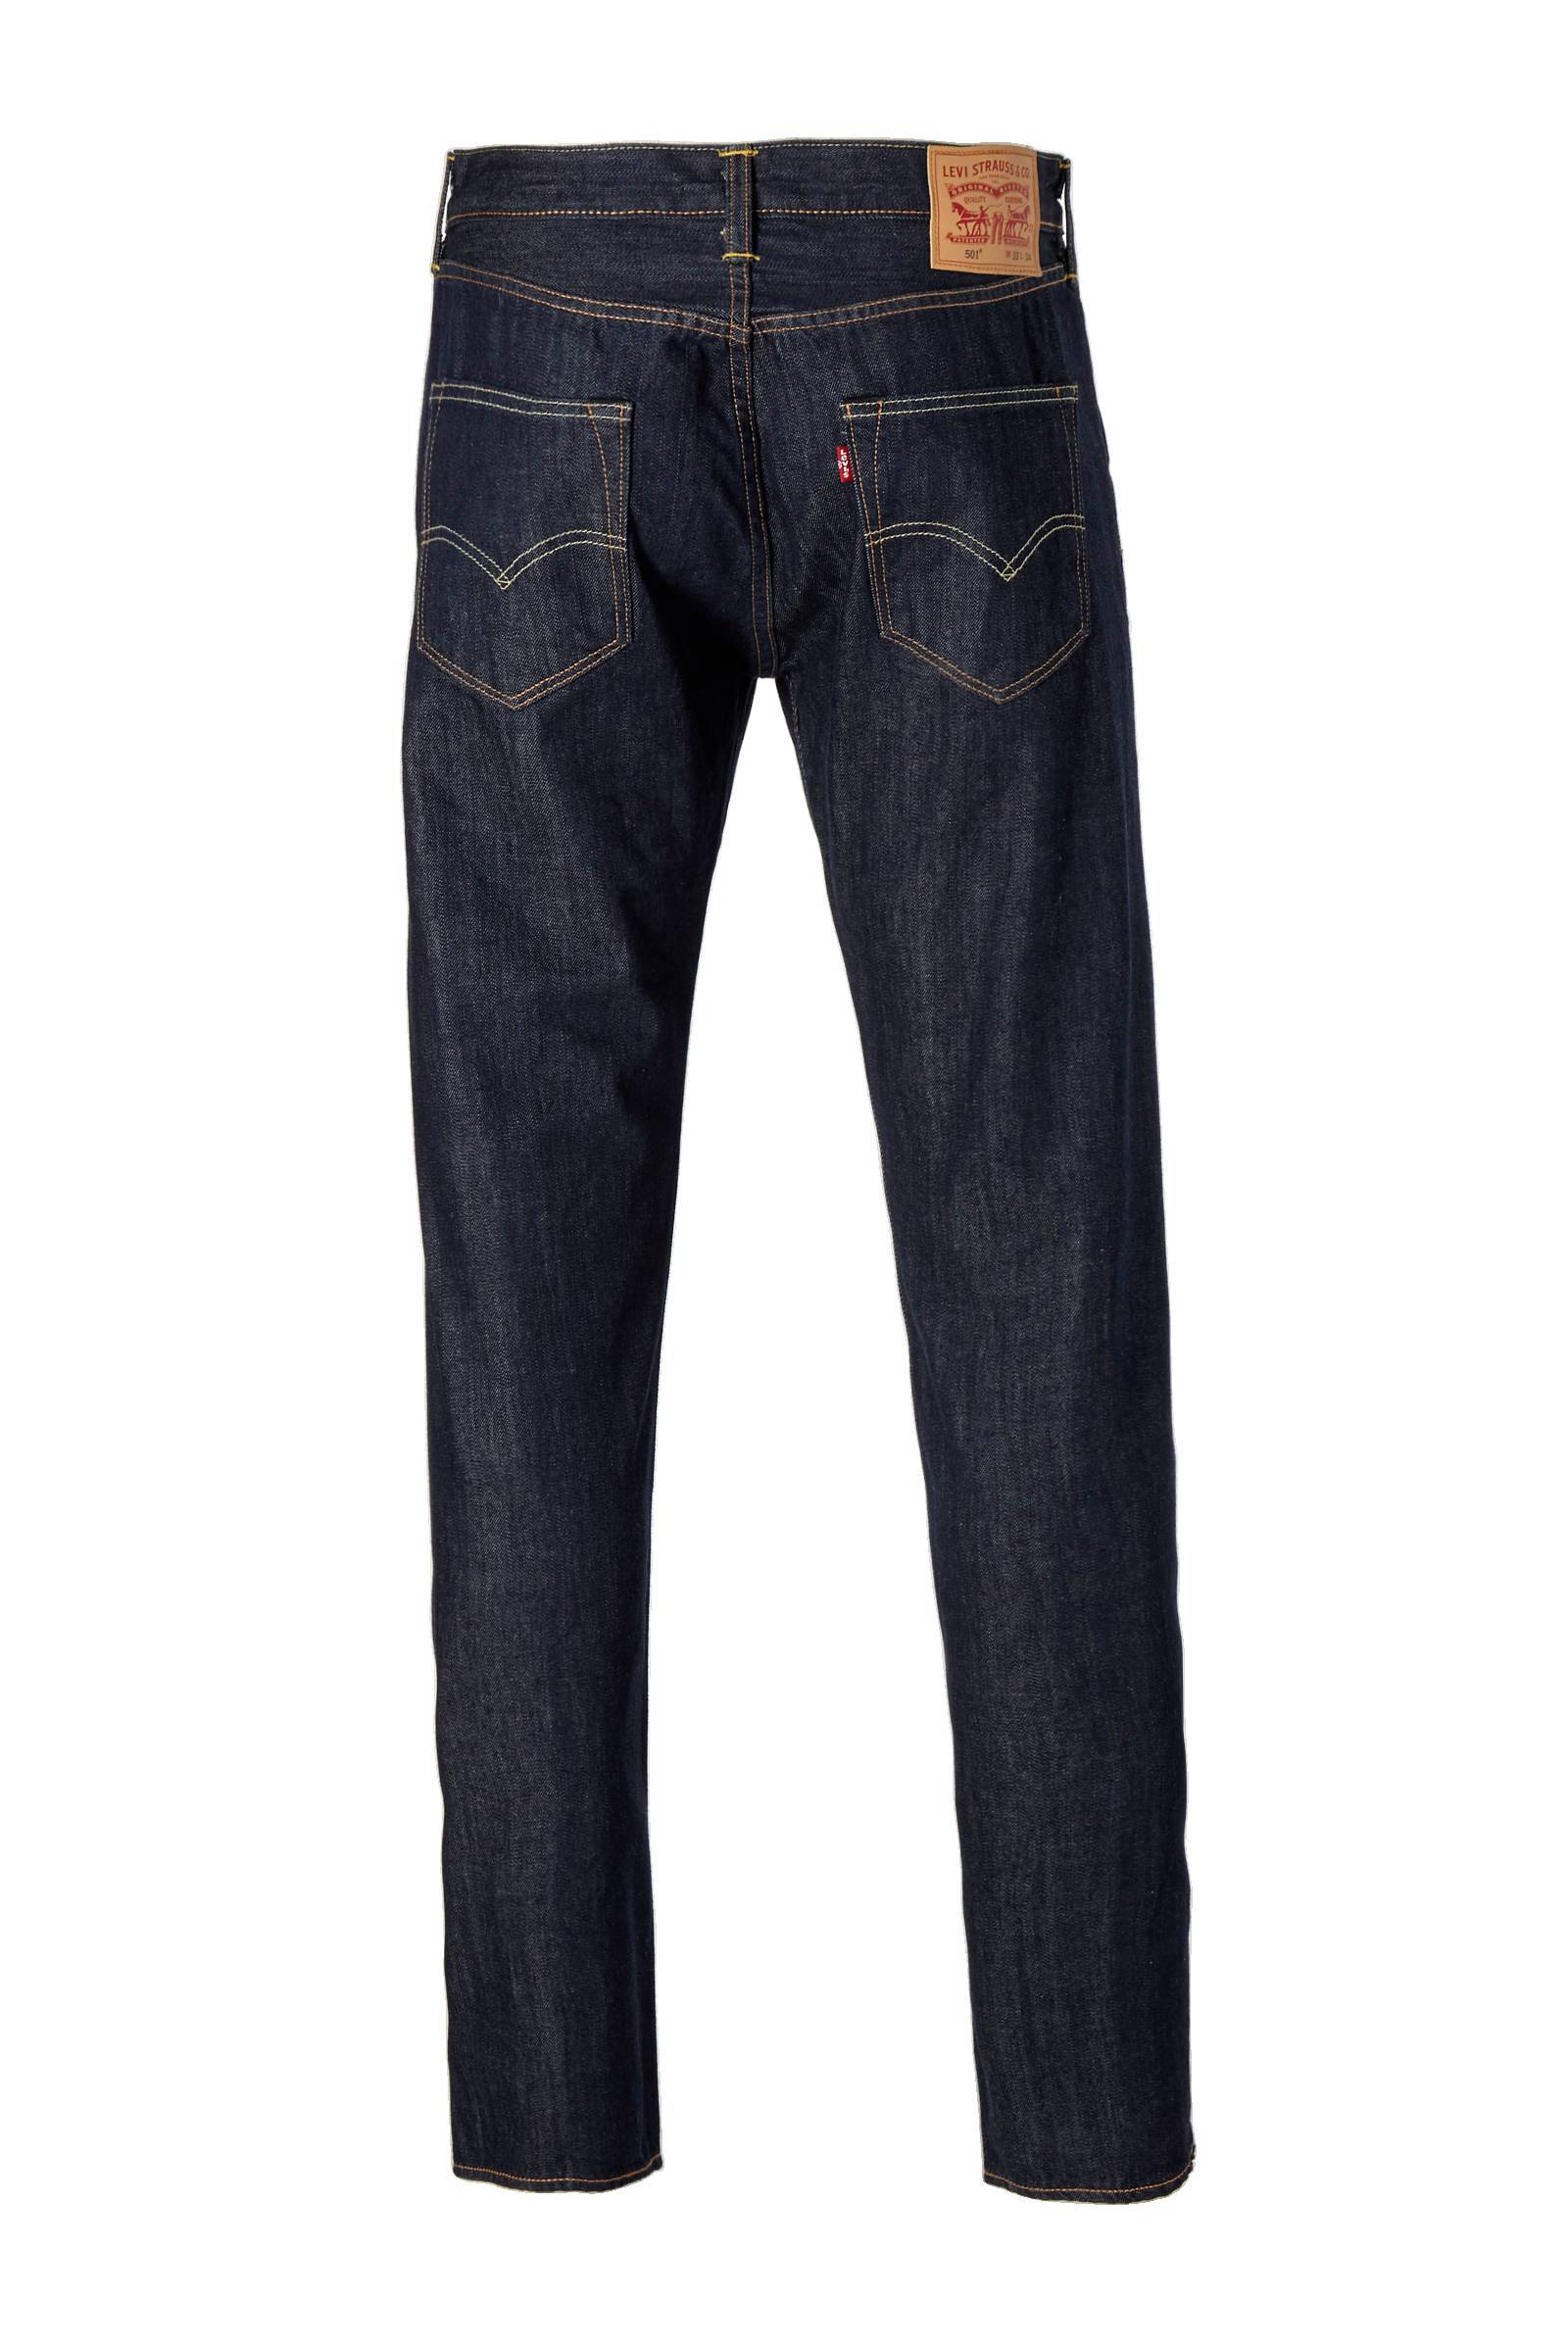 Levi's 501 regular fit jeans marlon 